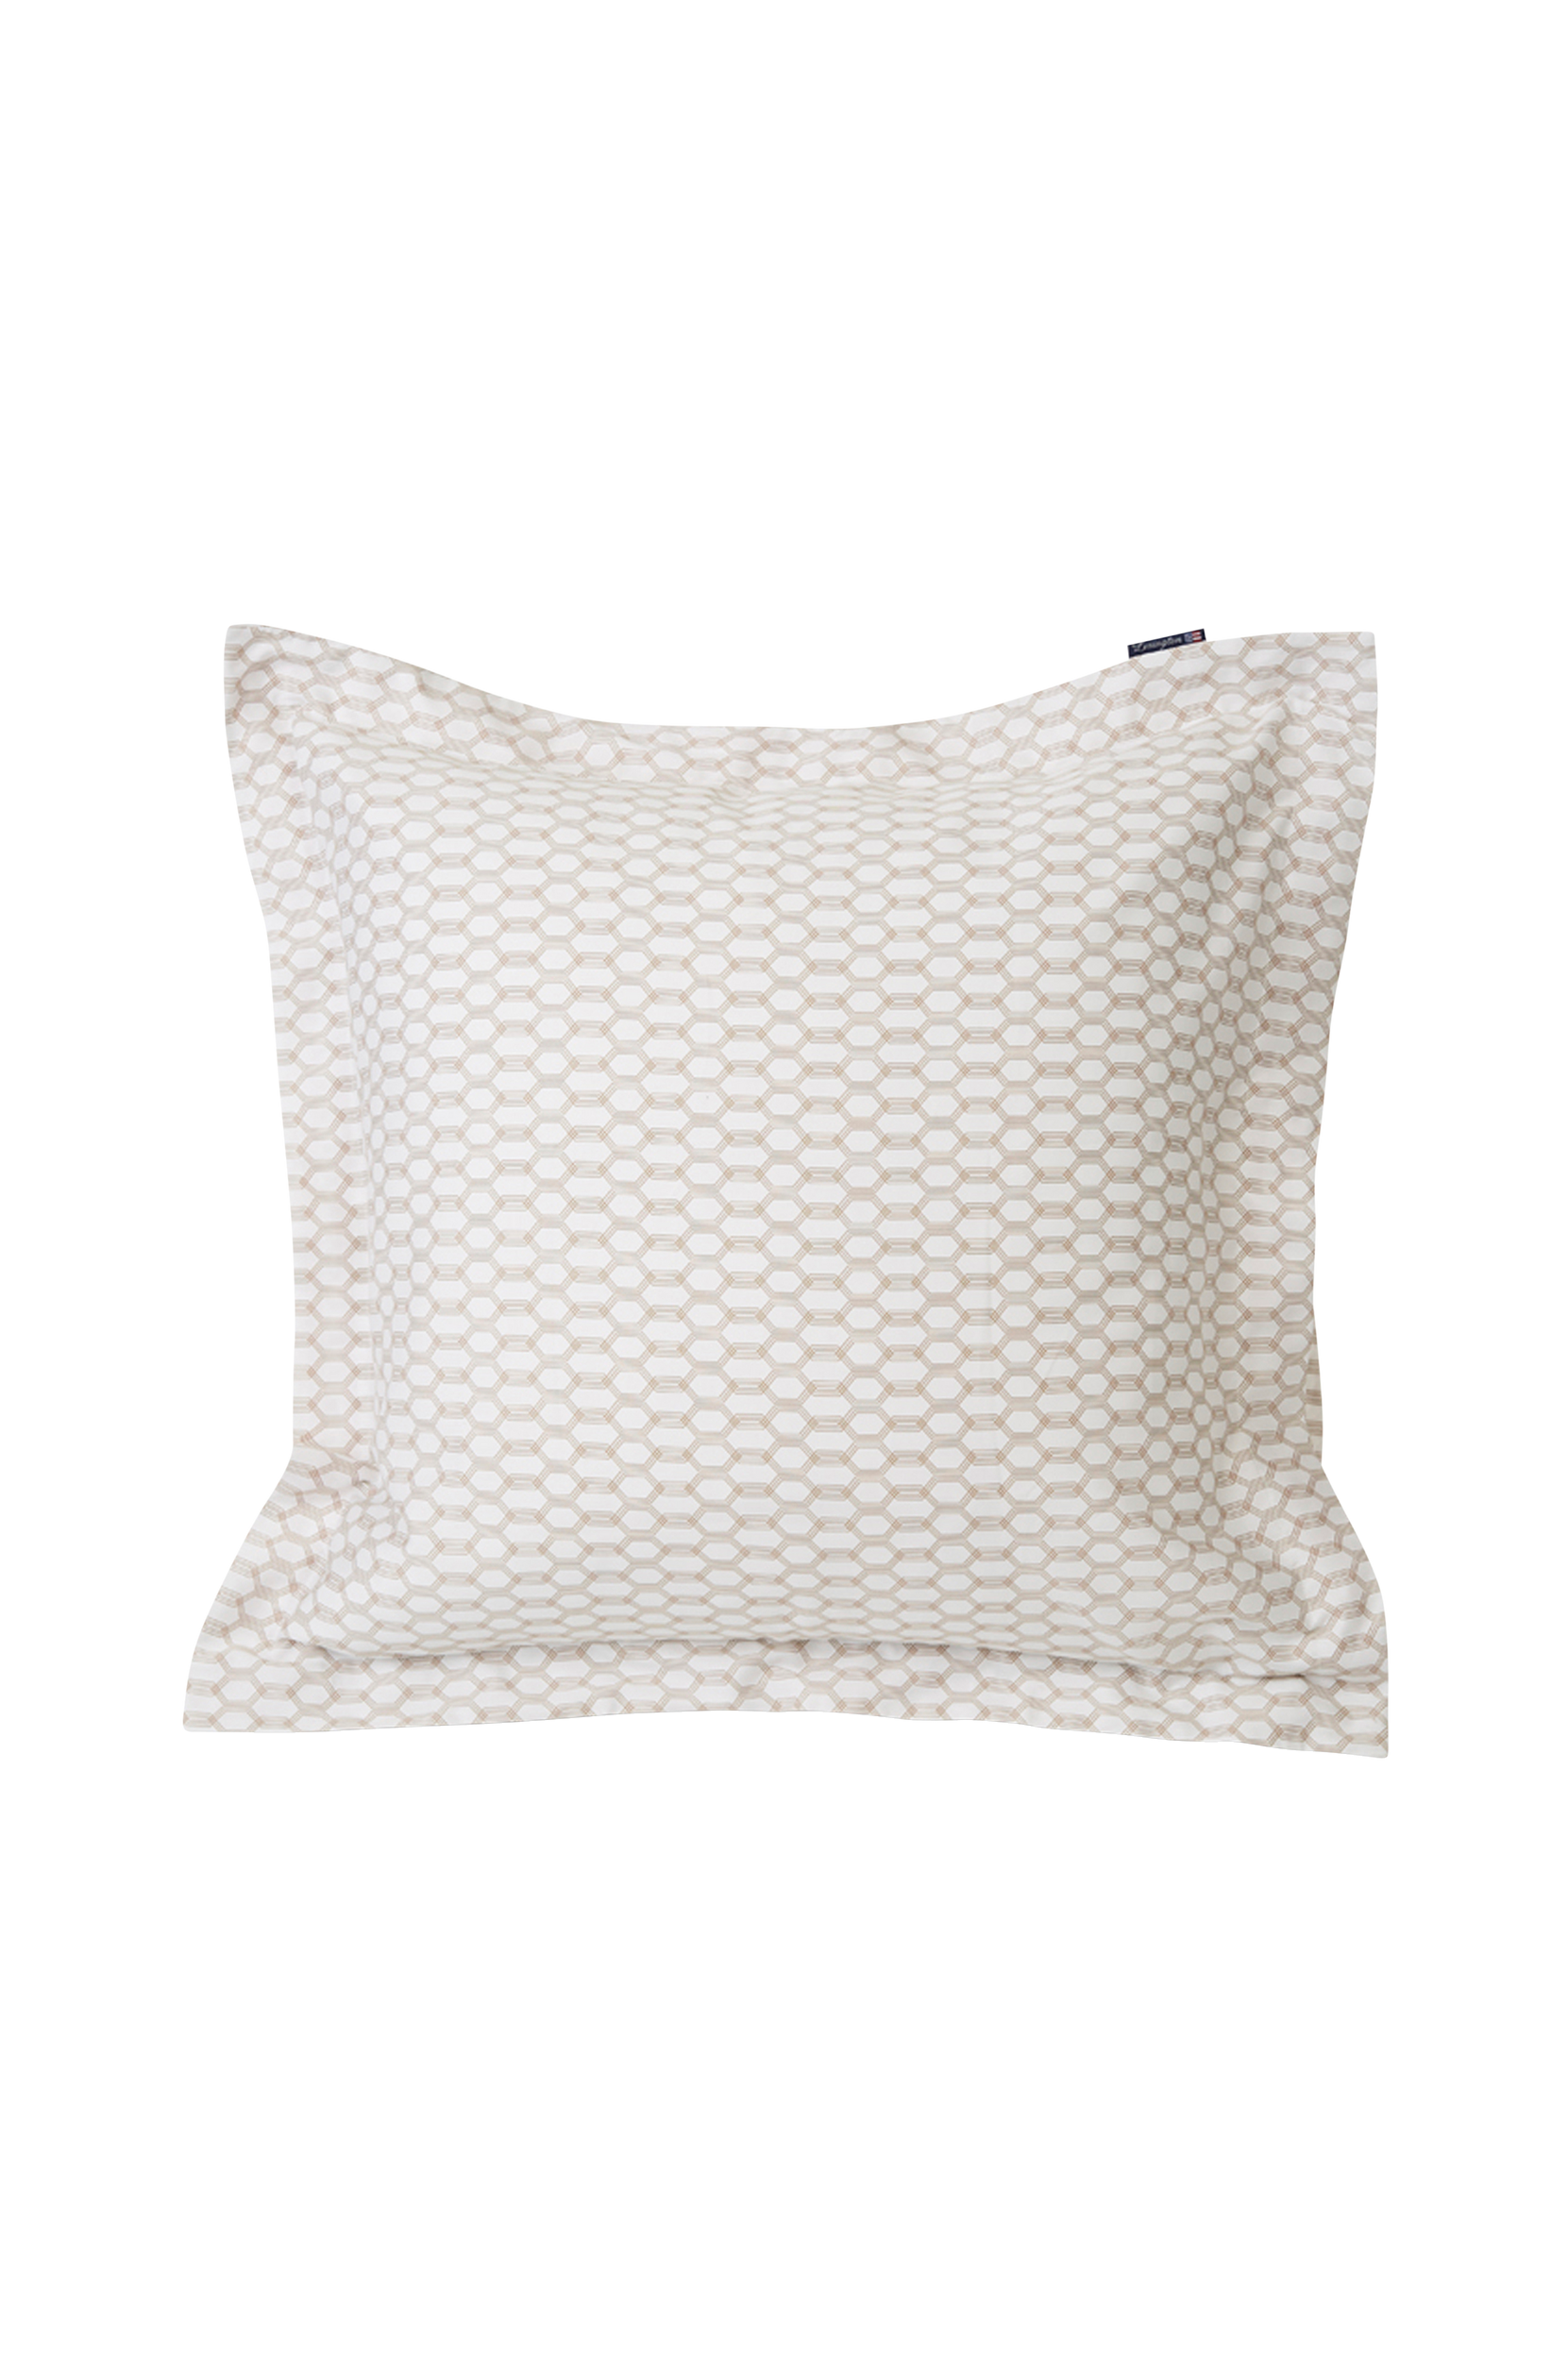 Tyynyliina Steel Printed Cotton Sateen Pillowcase 65x65 cm, Lexington